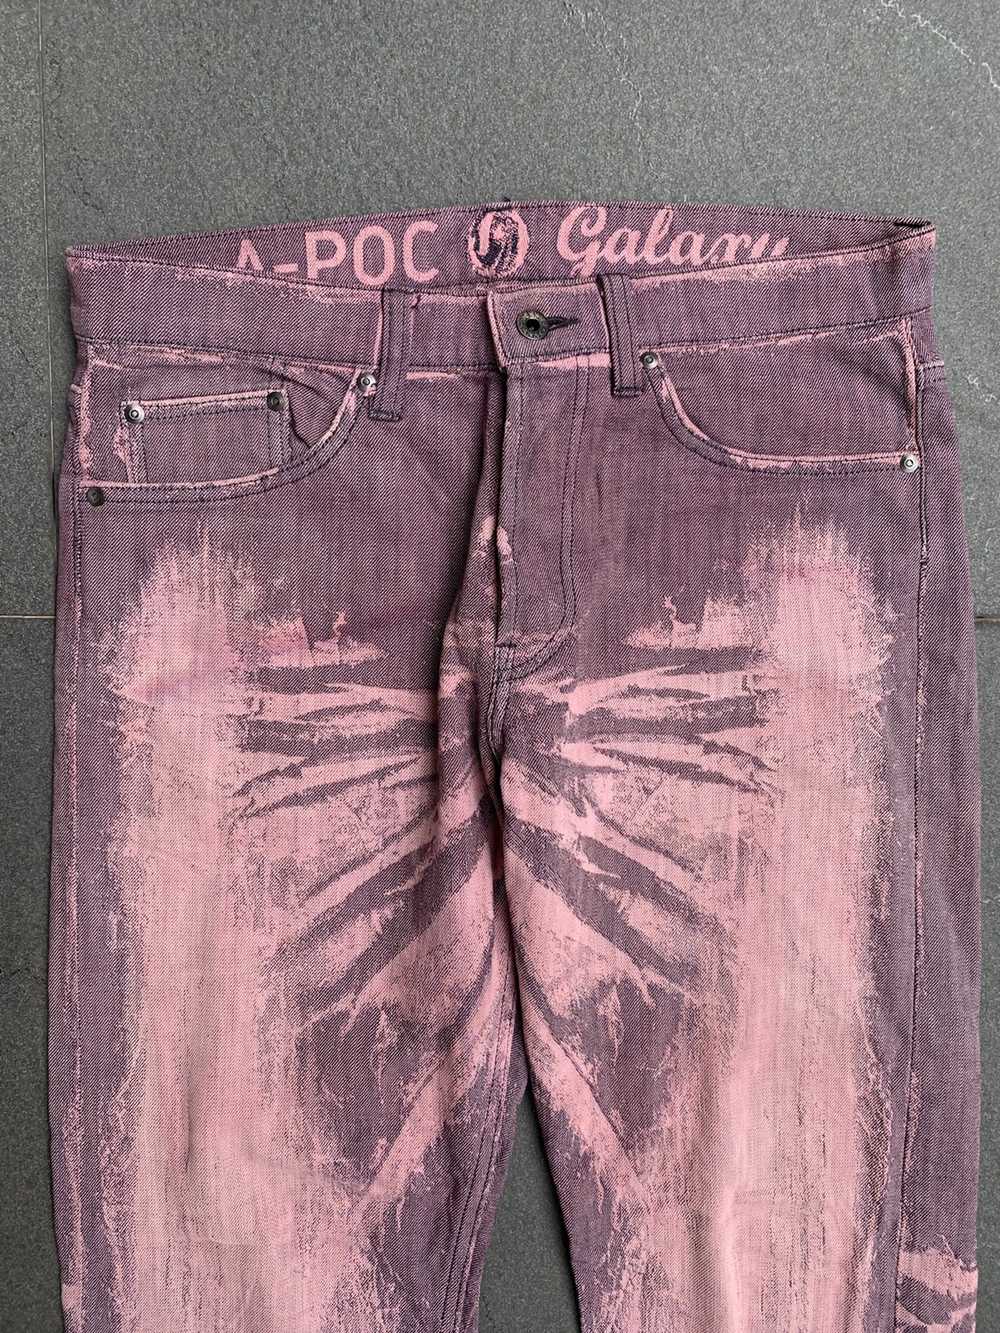 Issey Miyake APOC Galaxy Purple Denim Jeans - image 4